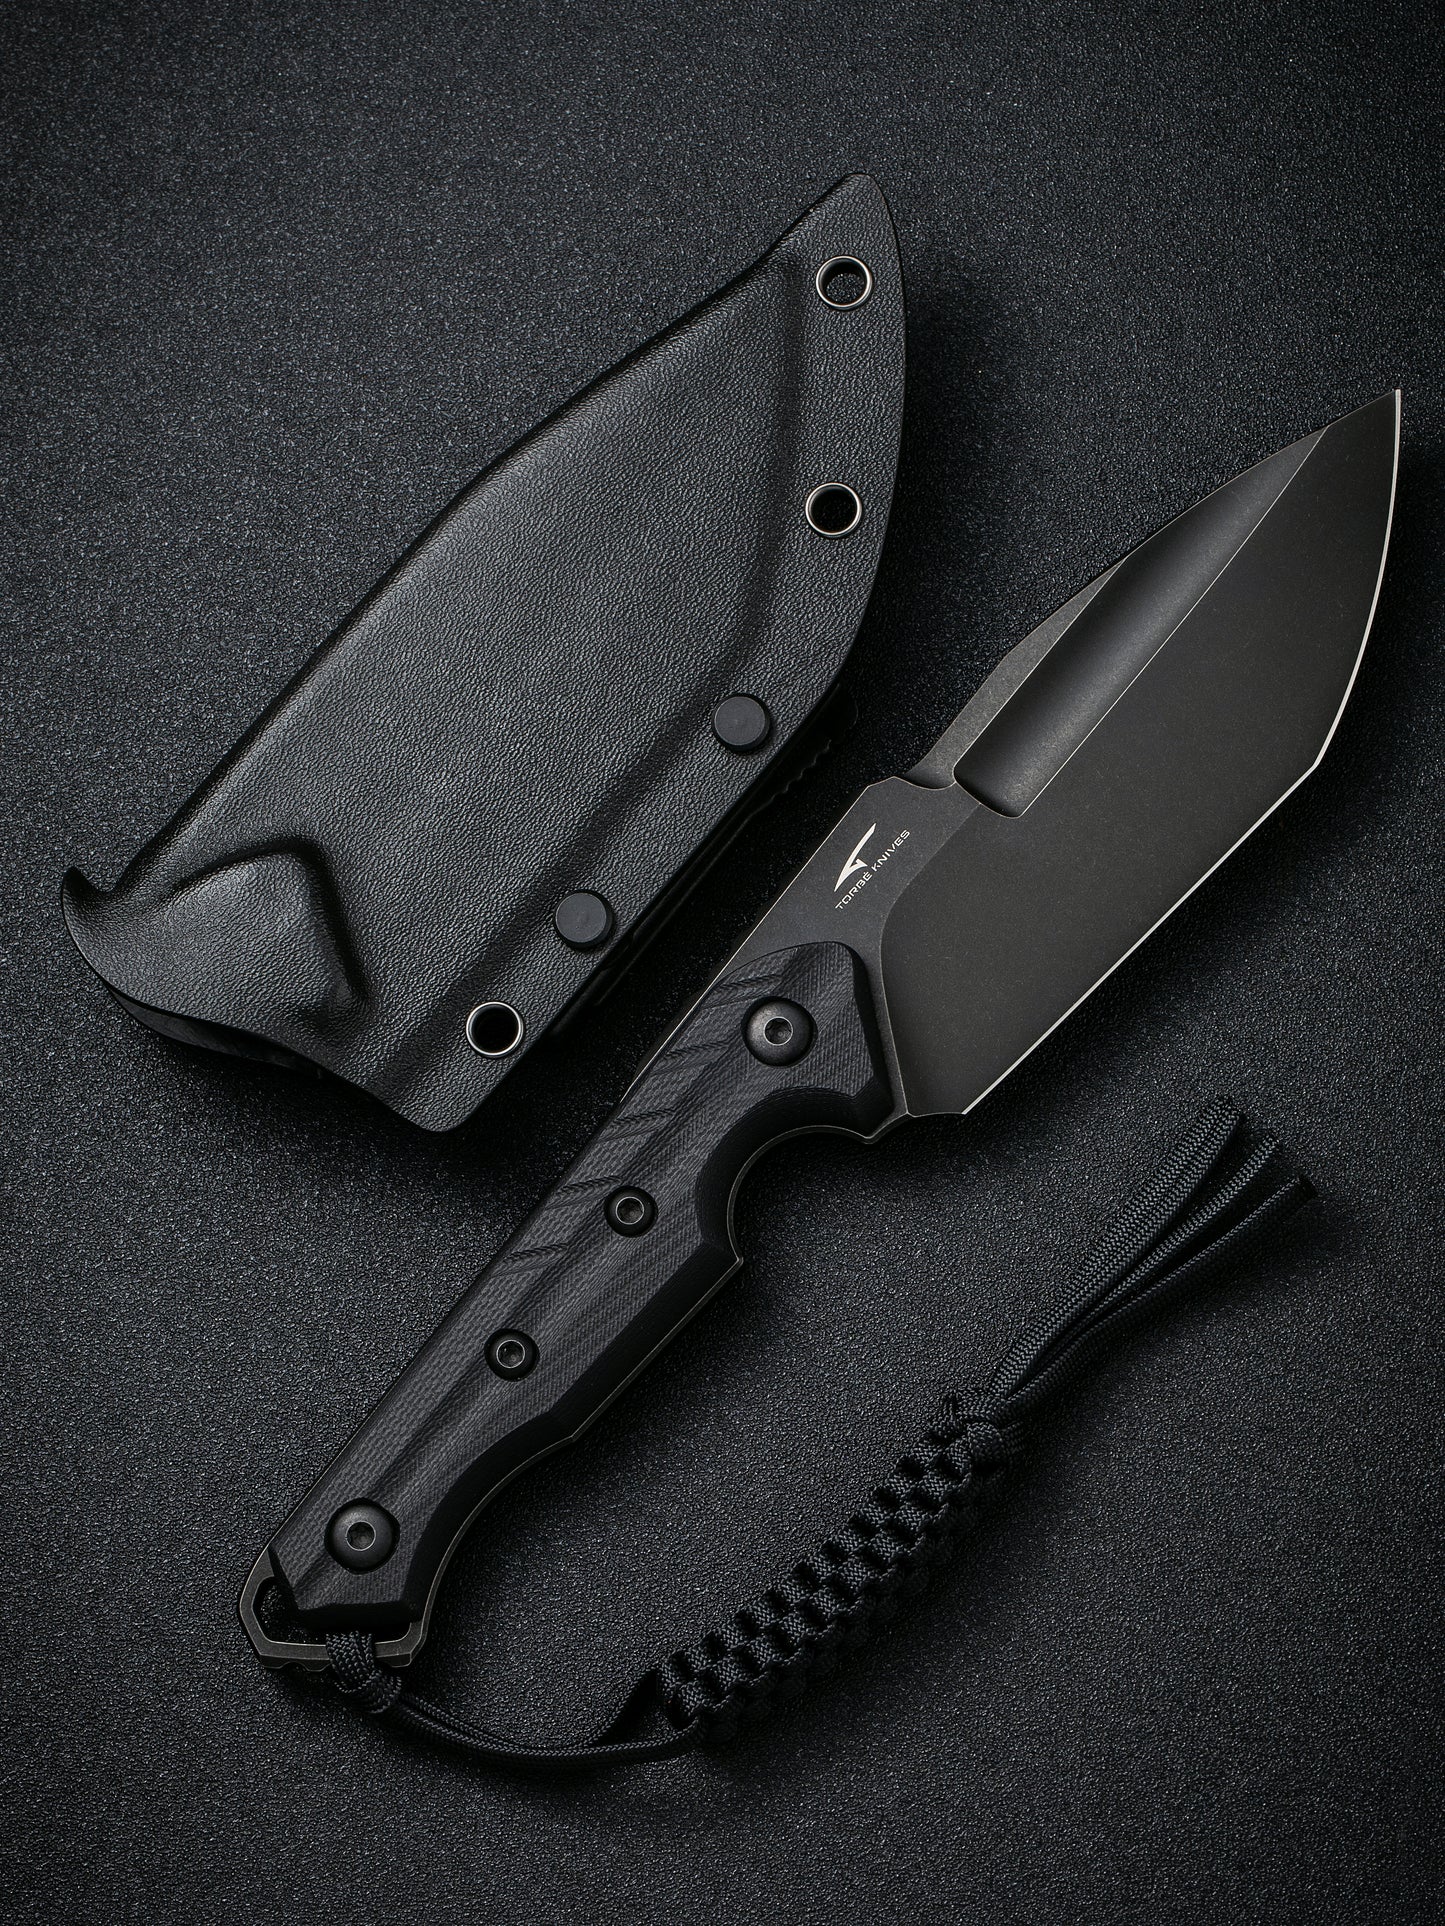 Civivi Maxwell 4.74" D2 Black Stonewashed G10 Fixed Blade Knife by Maciej Torbe C21040-1